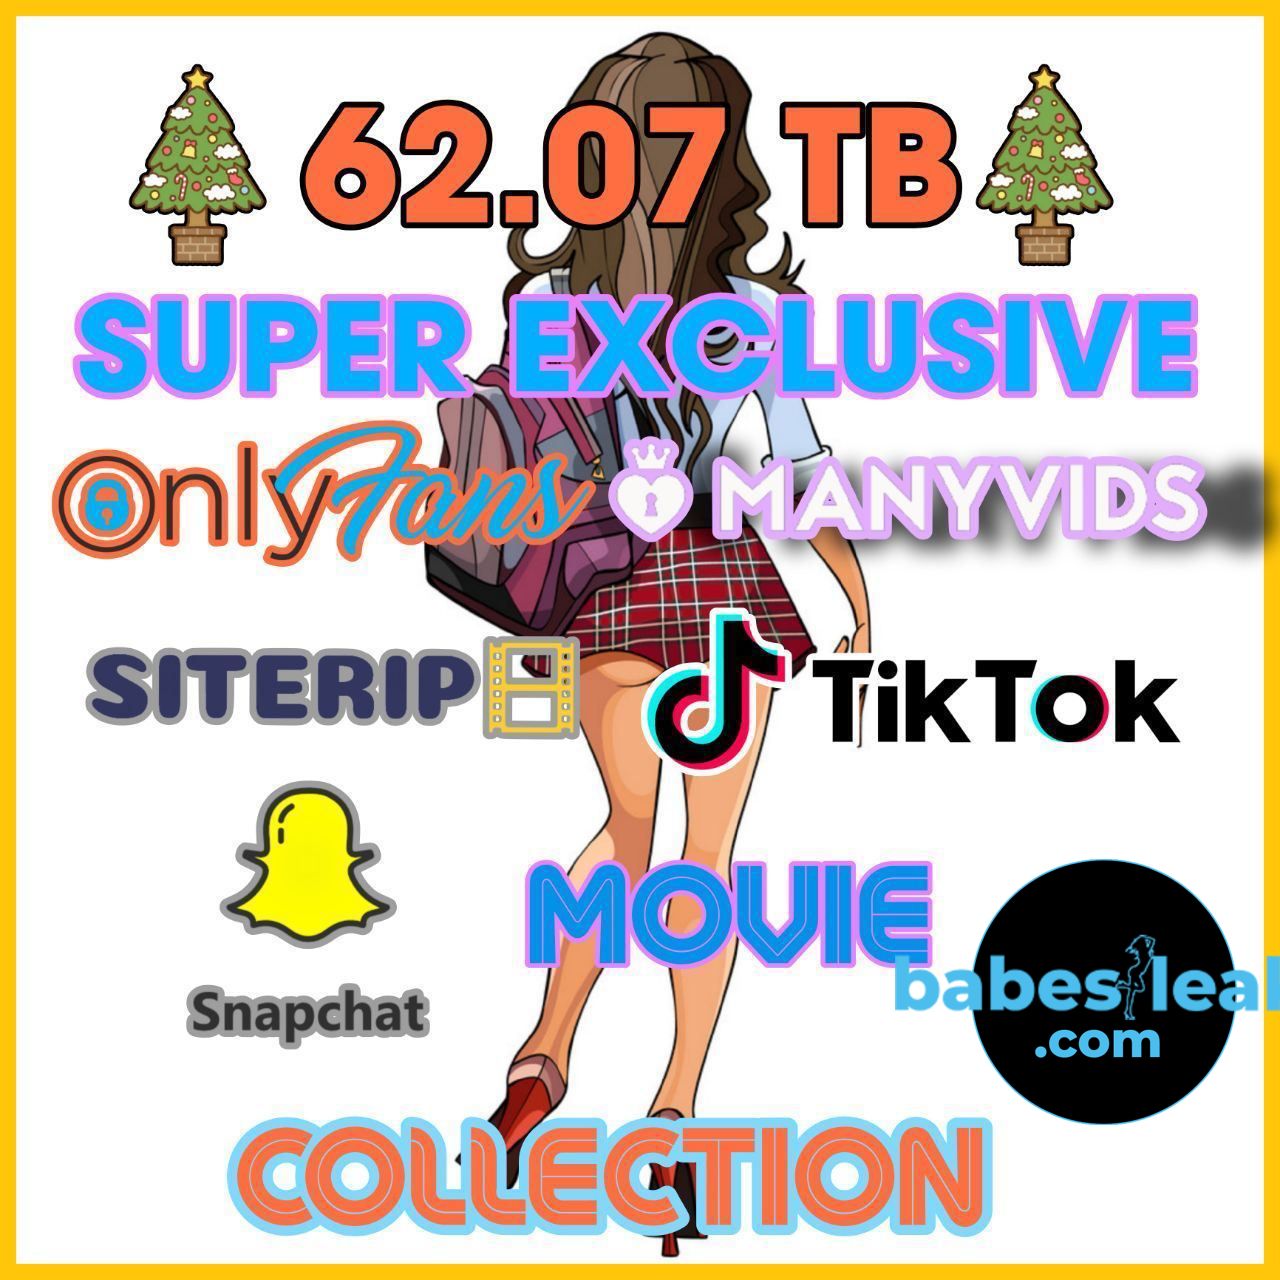 Mega Collection - Onlyfans Manyvids Tiktok Snapchat Siterip leak